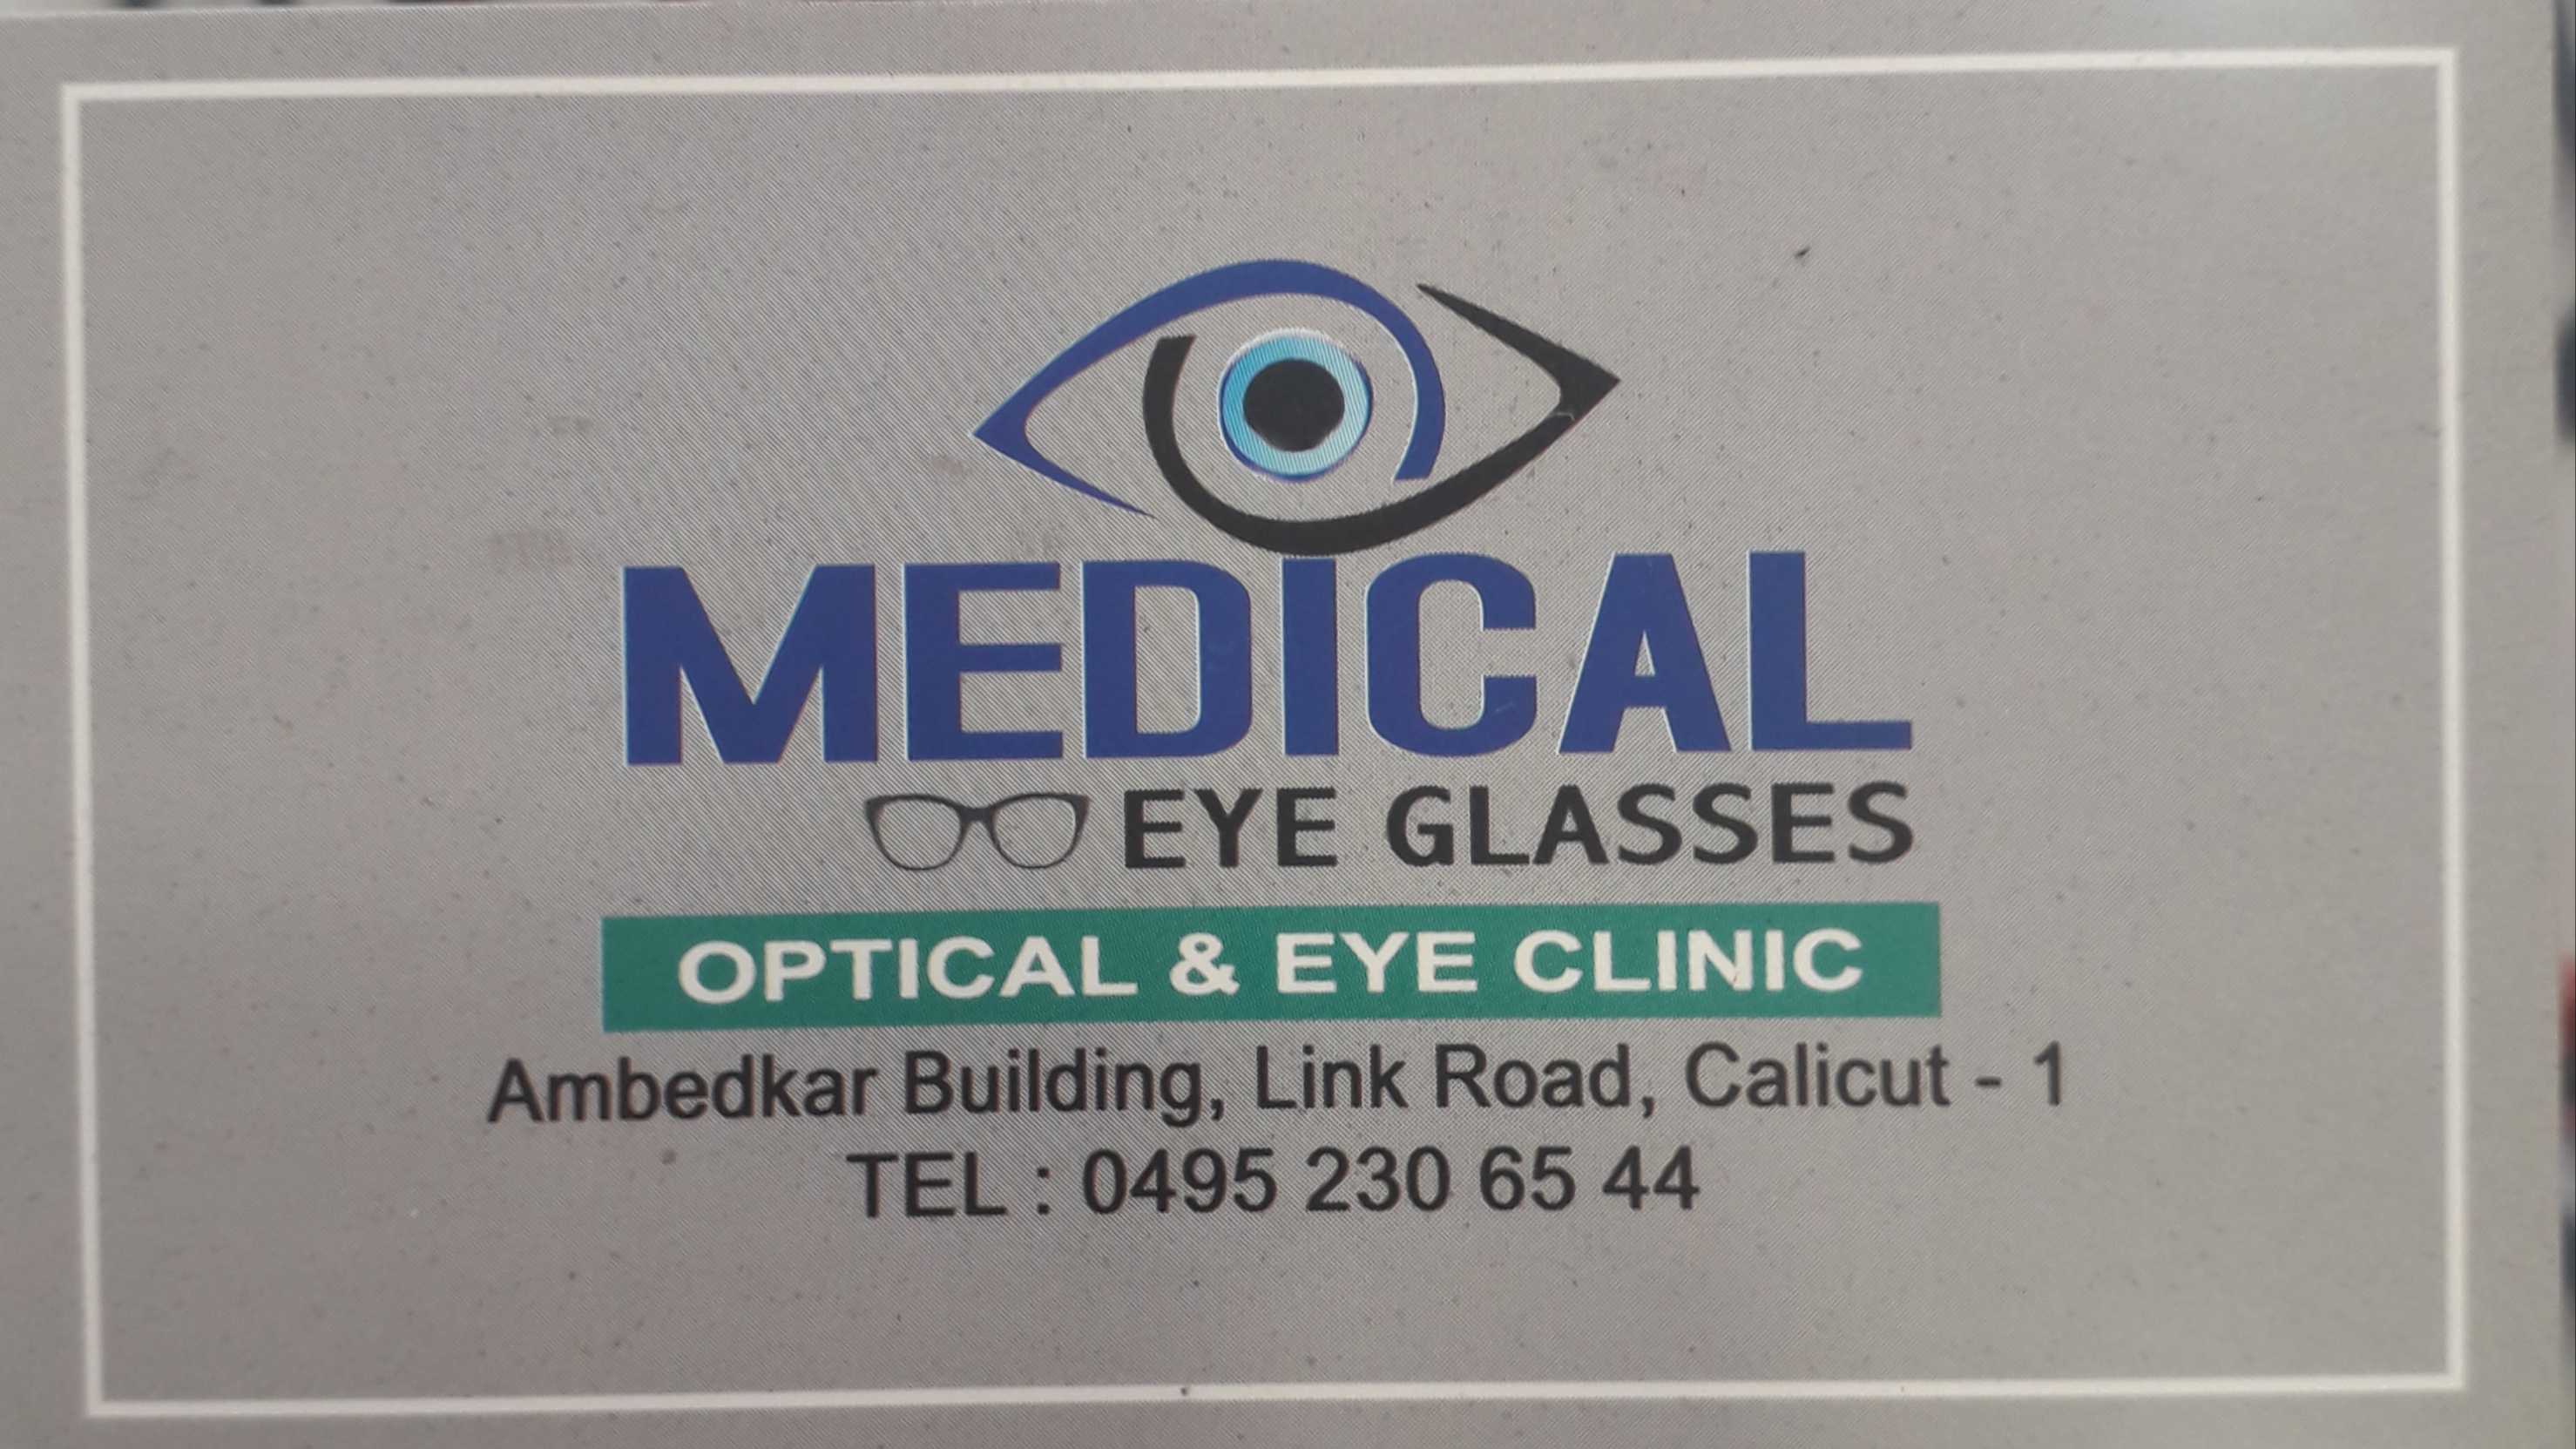 MEDICAL EYE GLASSES Optical & Eye clinic, OPTICAL SHOP,  service in Kozhikode Town, Kozhikode